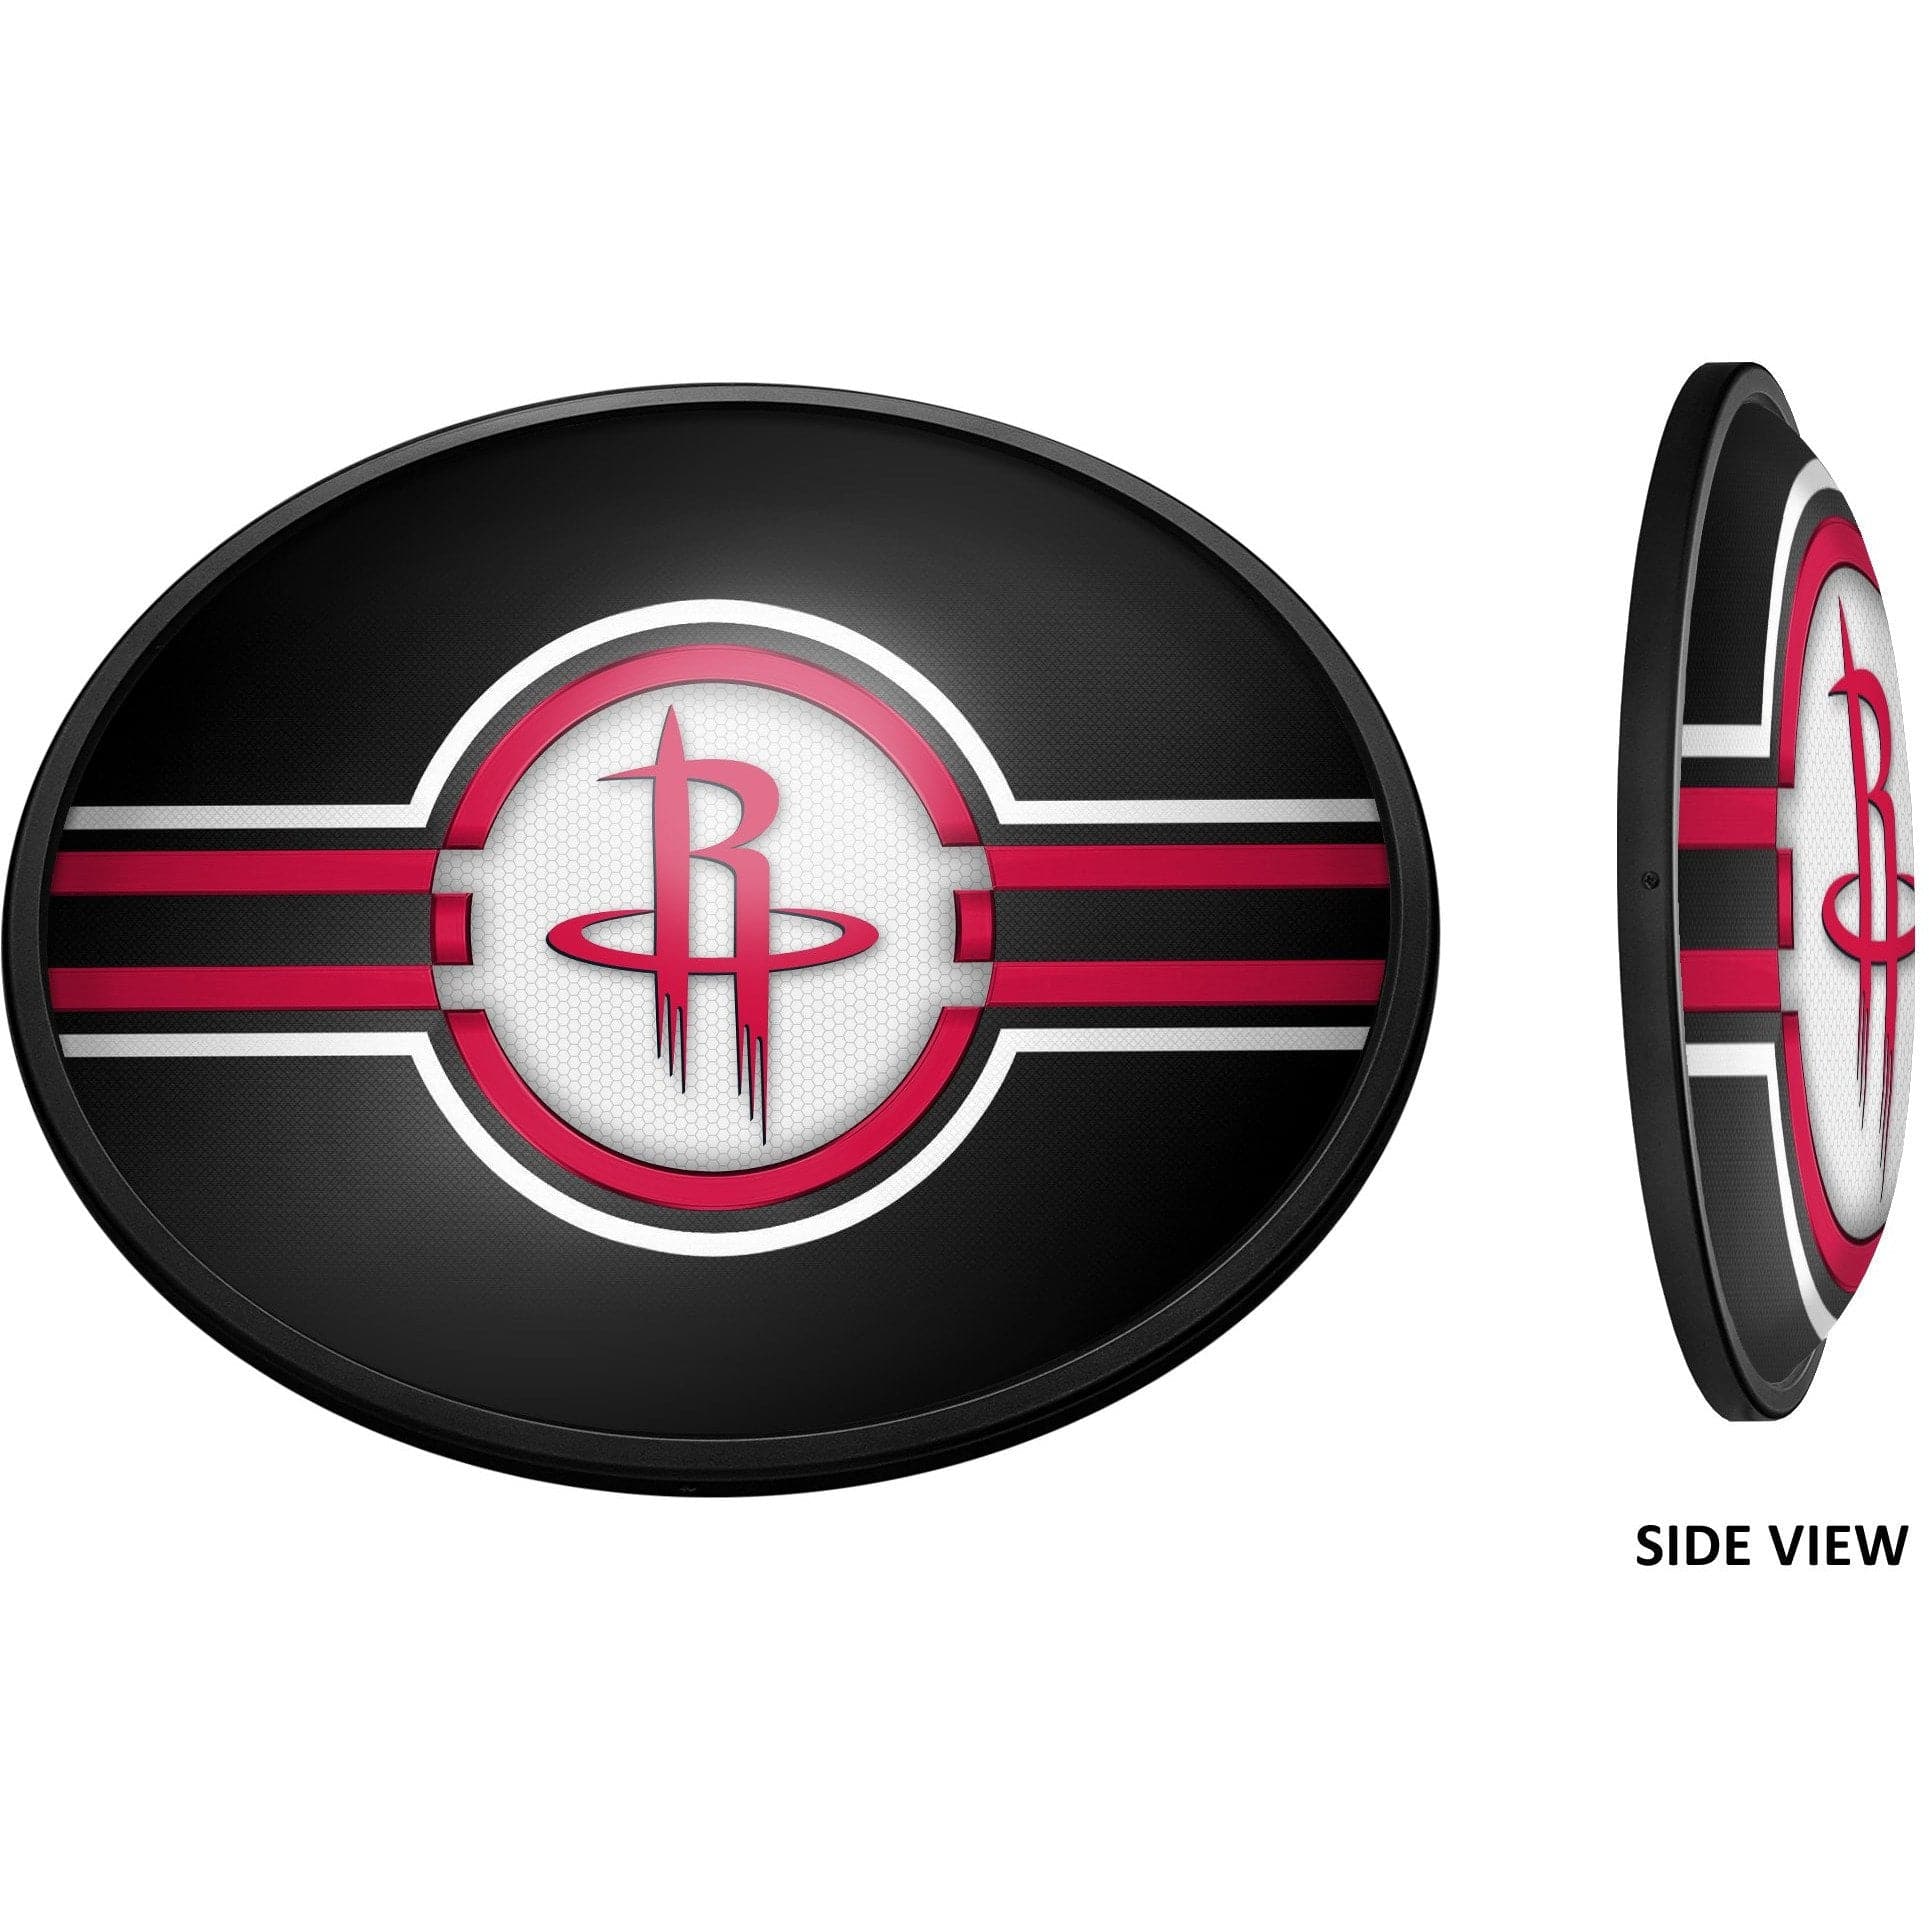 Houston Rockets: Oval Slimline Lighted Wall Sign - The Fan-Brand